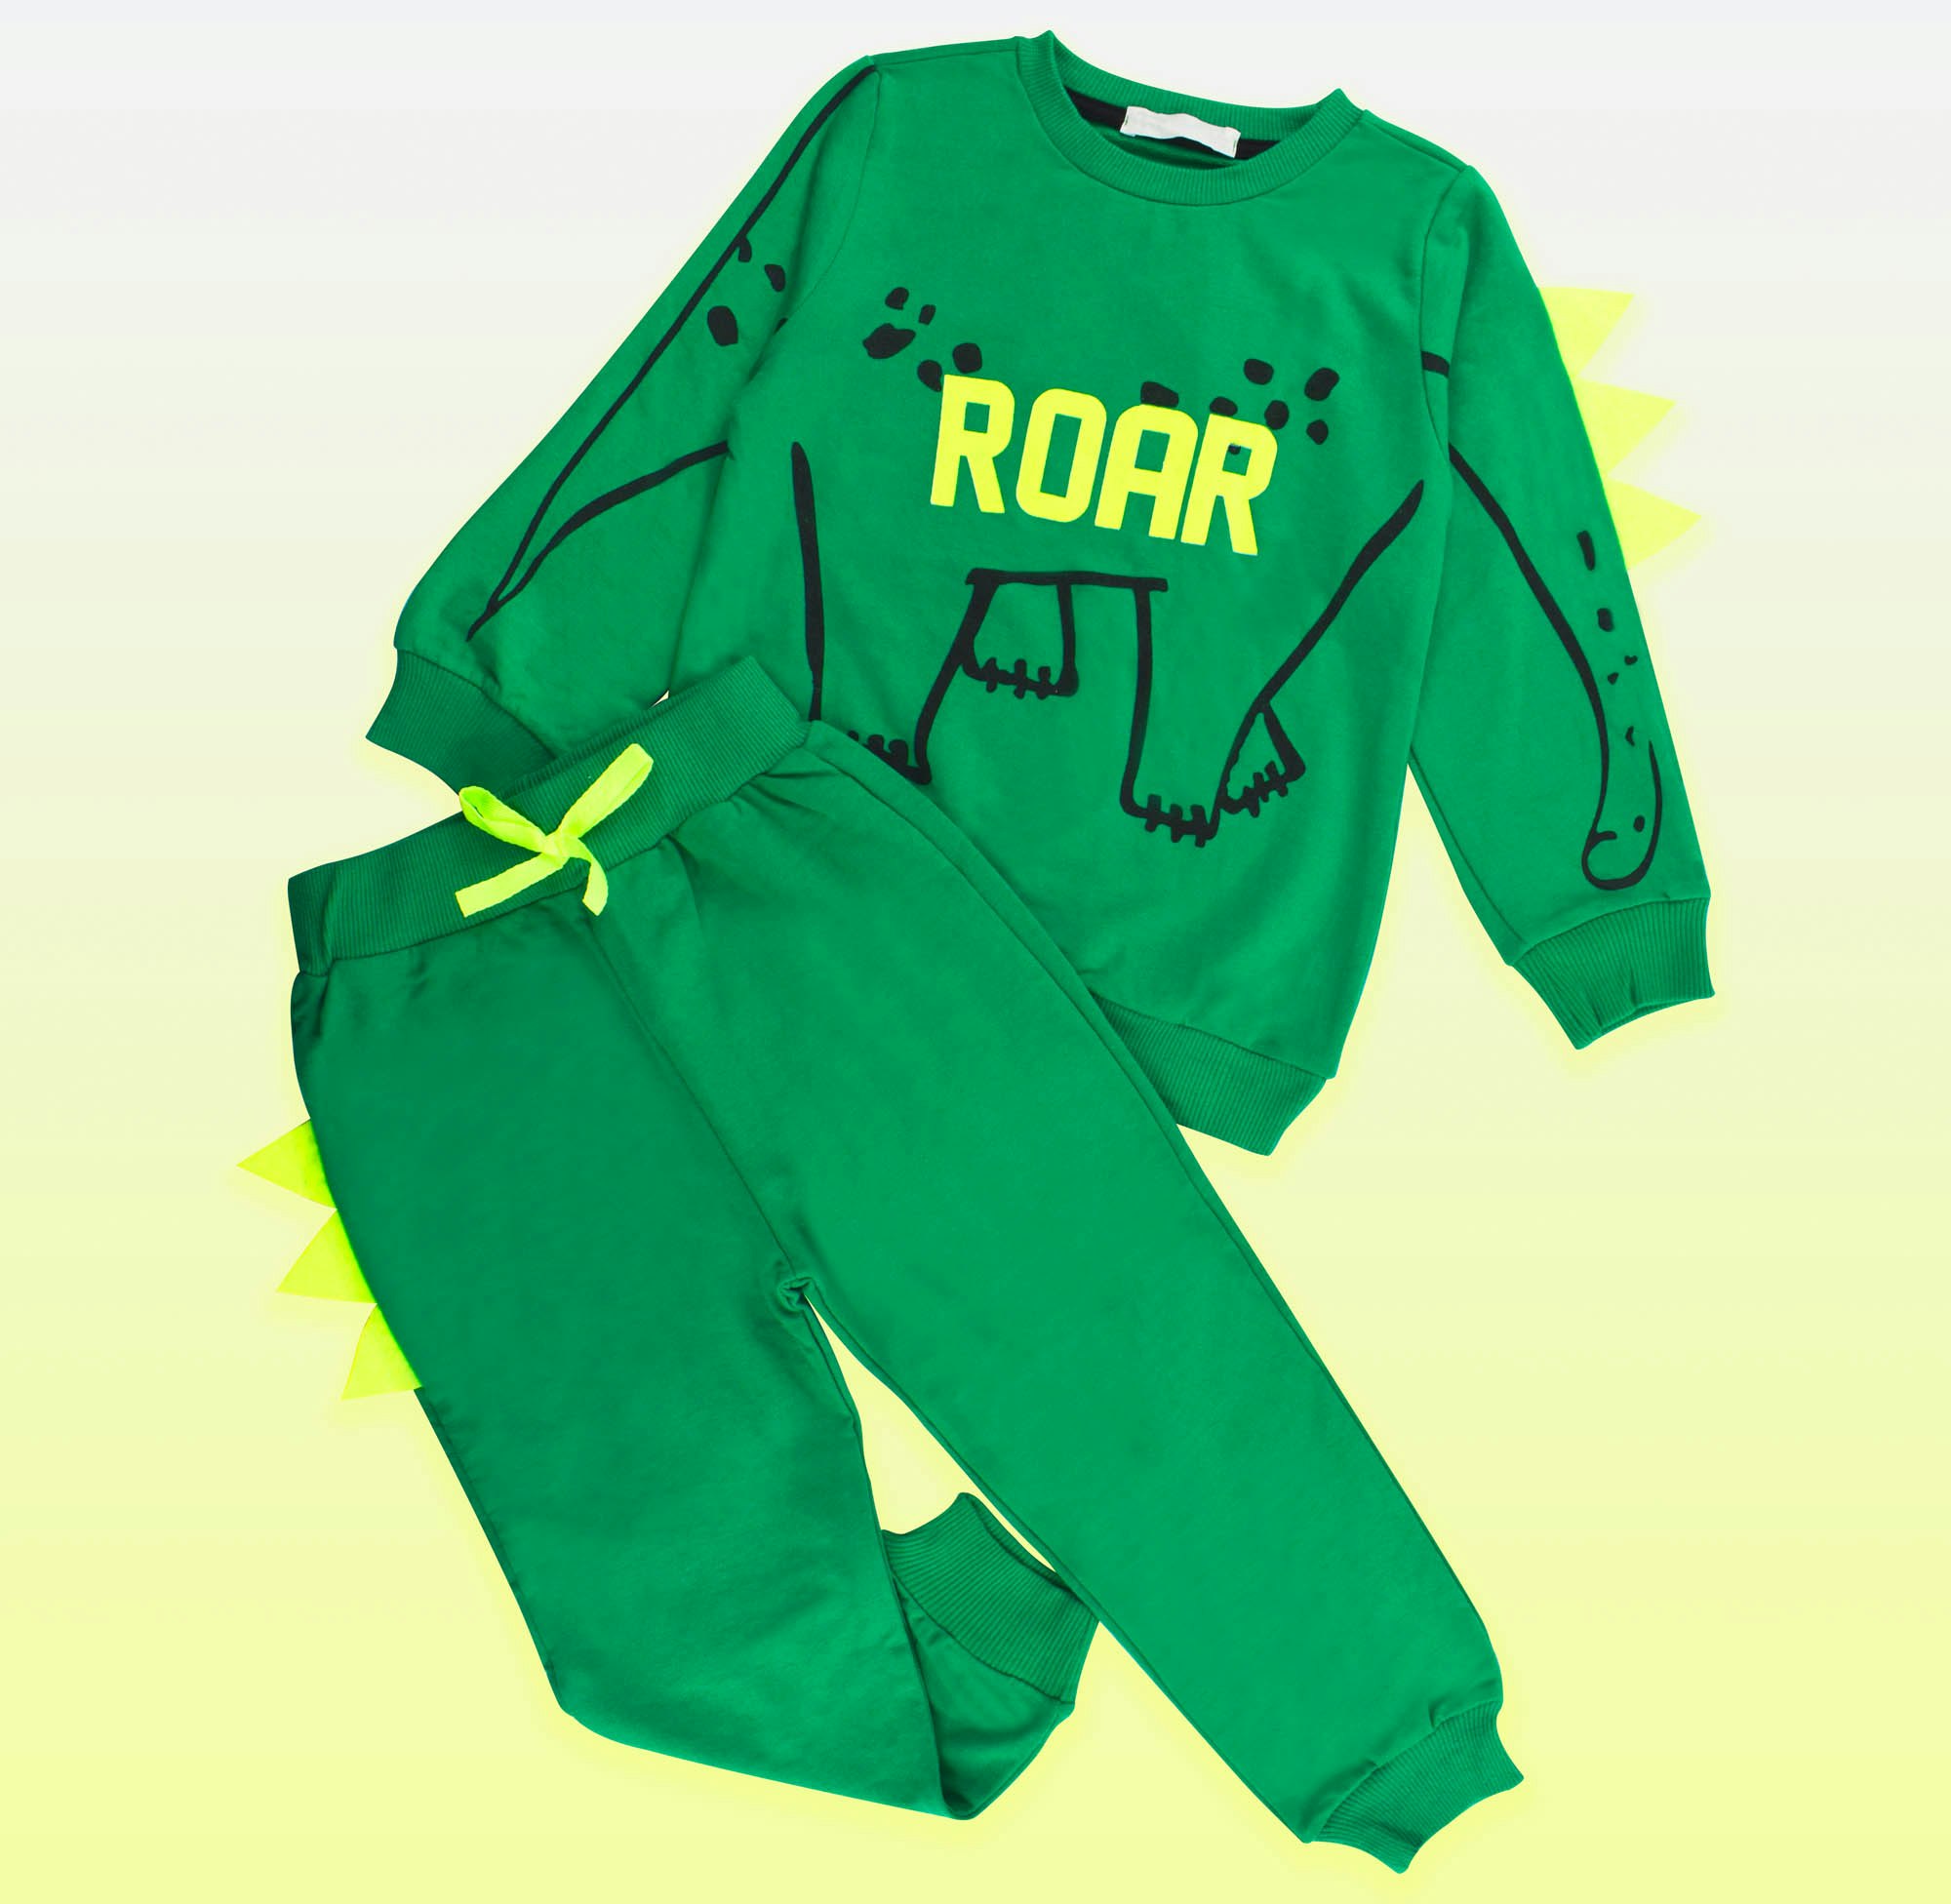 The Green ROAR Pyjamas